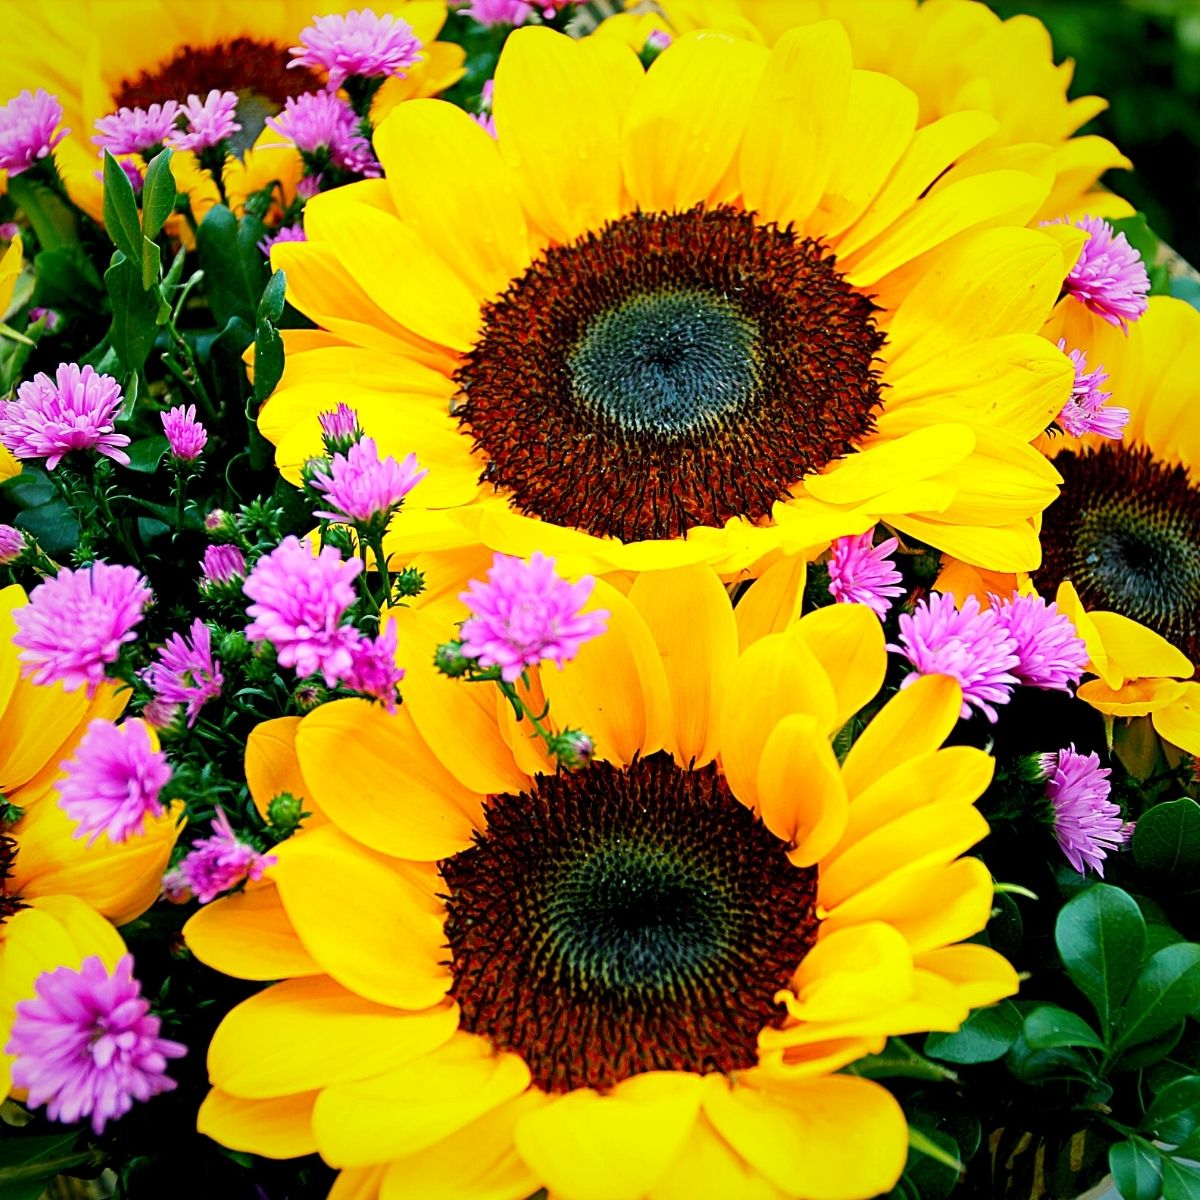 The sunflower is a classic summer flower